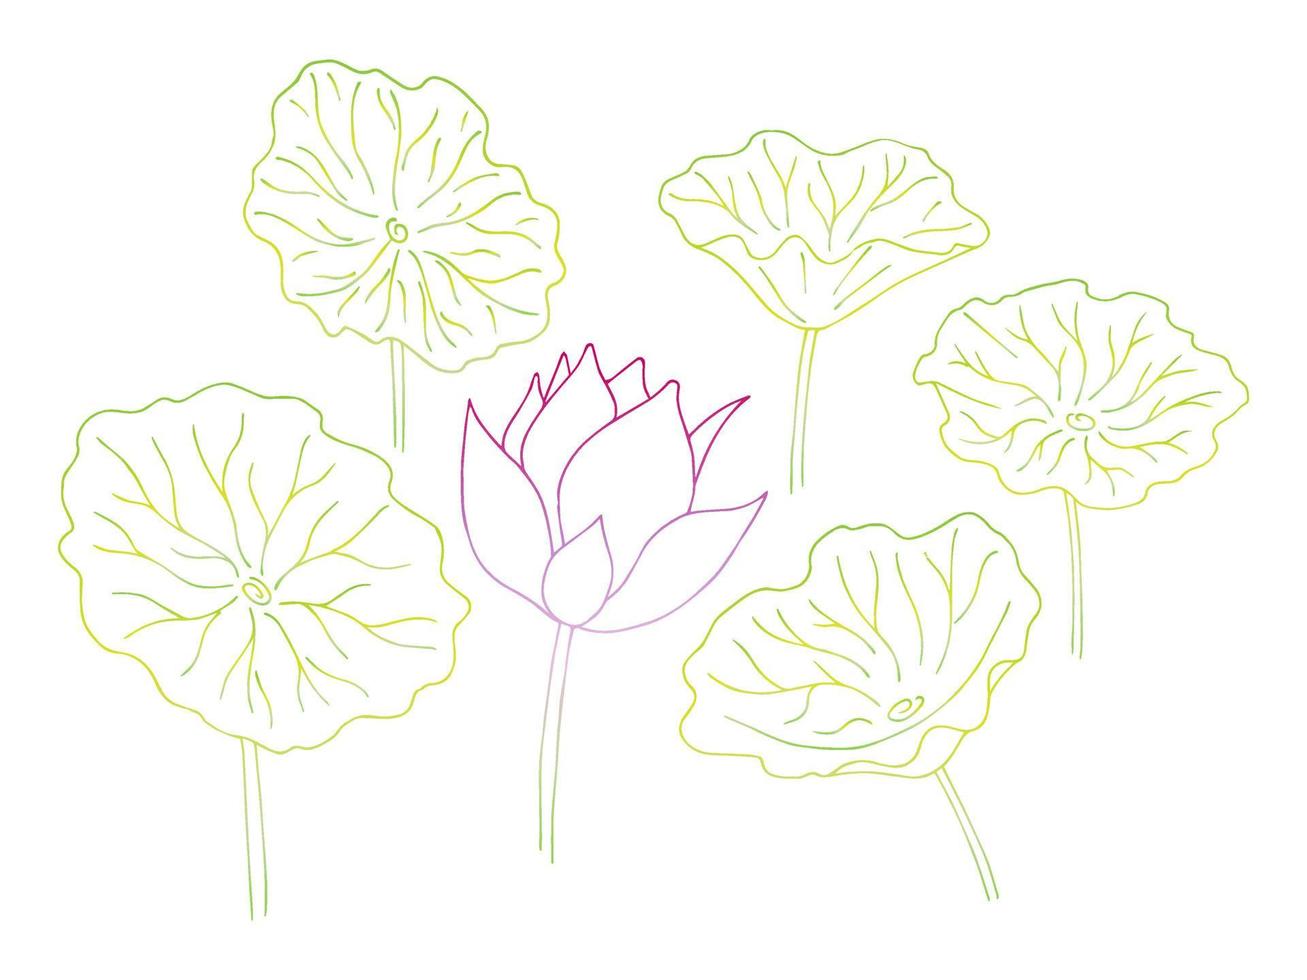 Lotus flower and leaf hand drawn botanical illustration vector